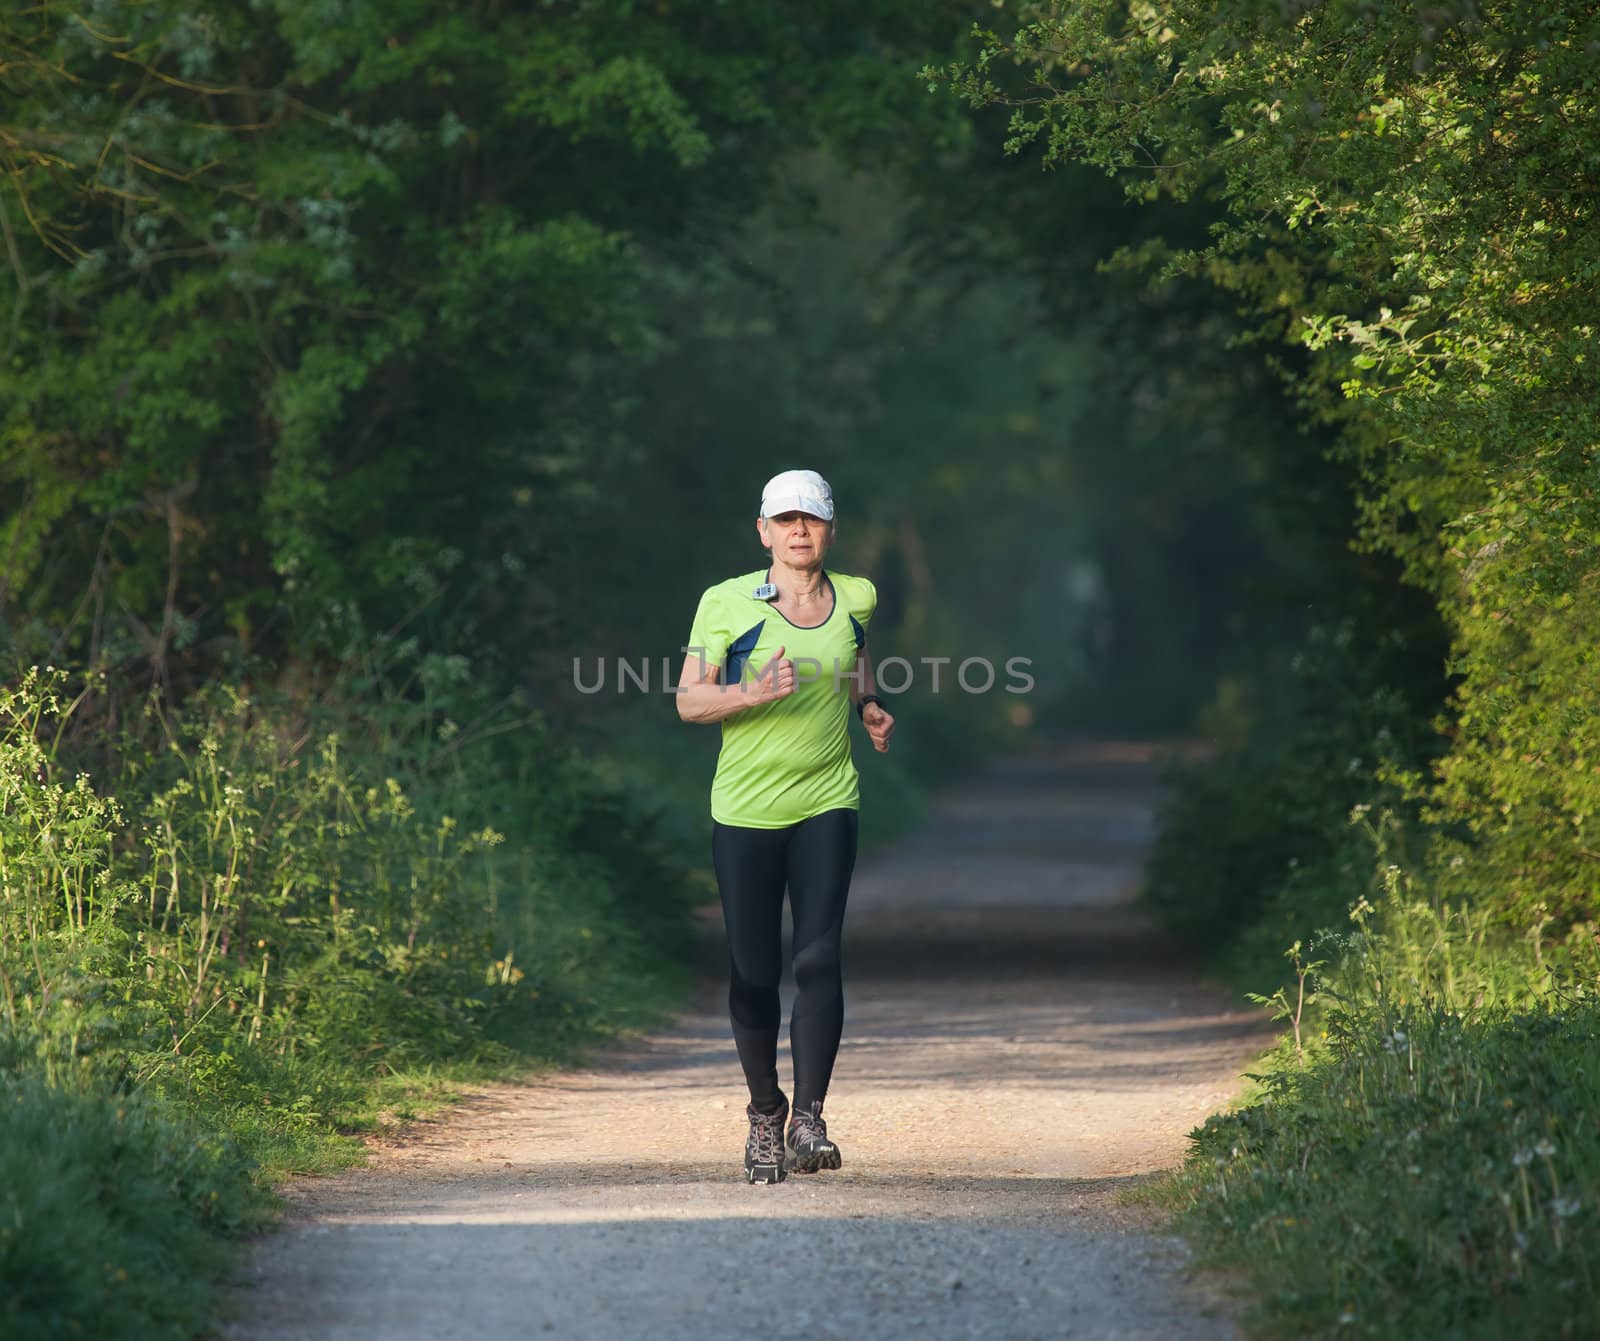 Older woman on training run along countryside path